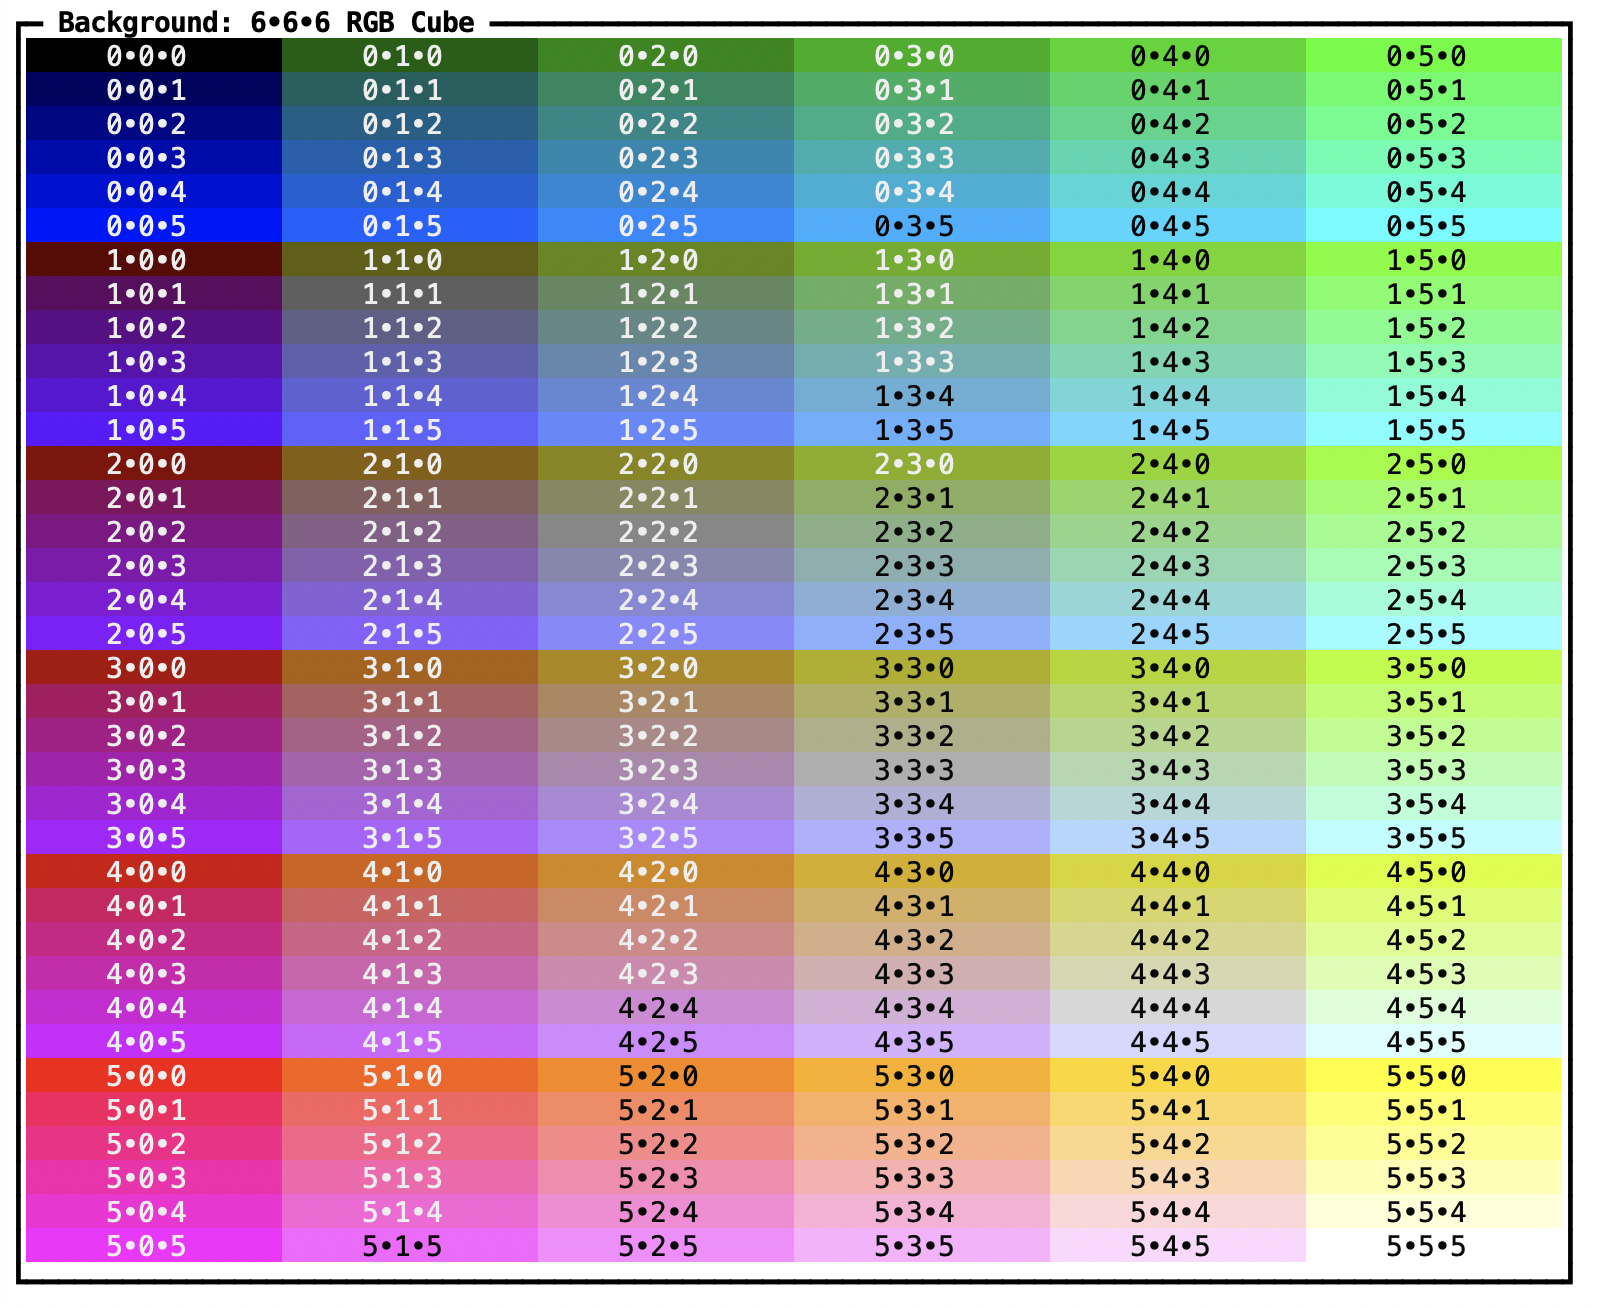 a grid visualizing the 6x6x6 embedded RGB cube